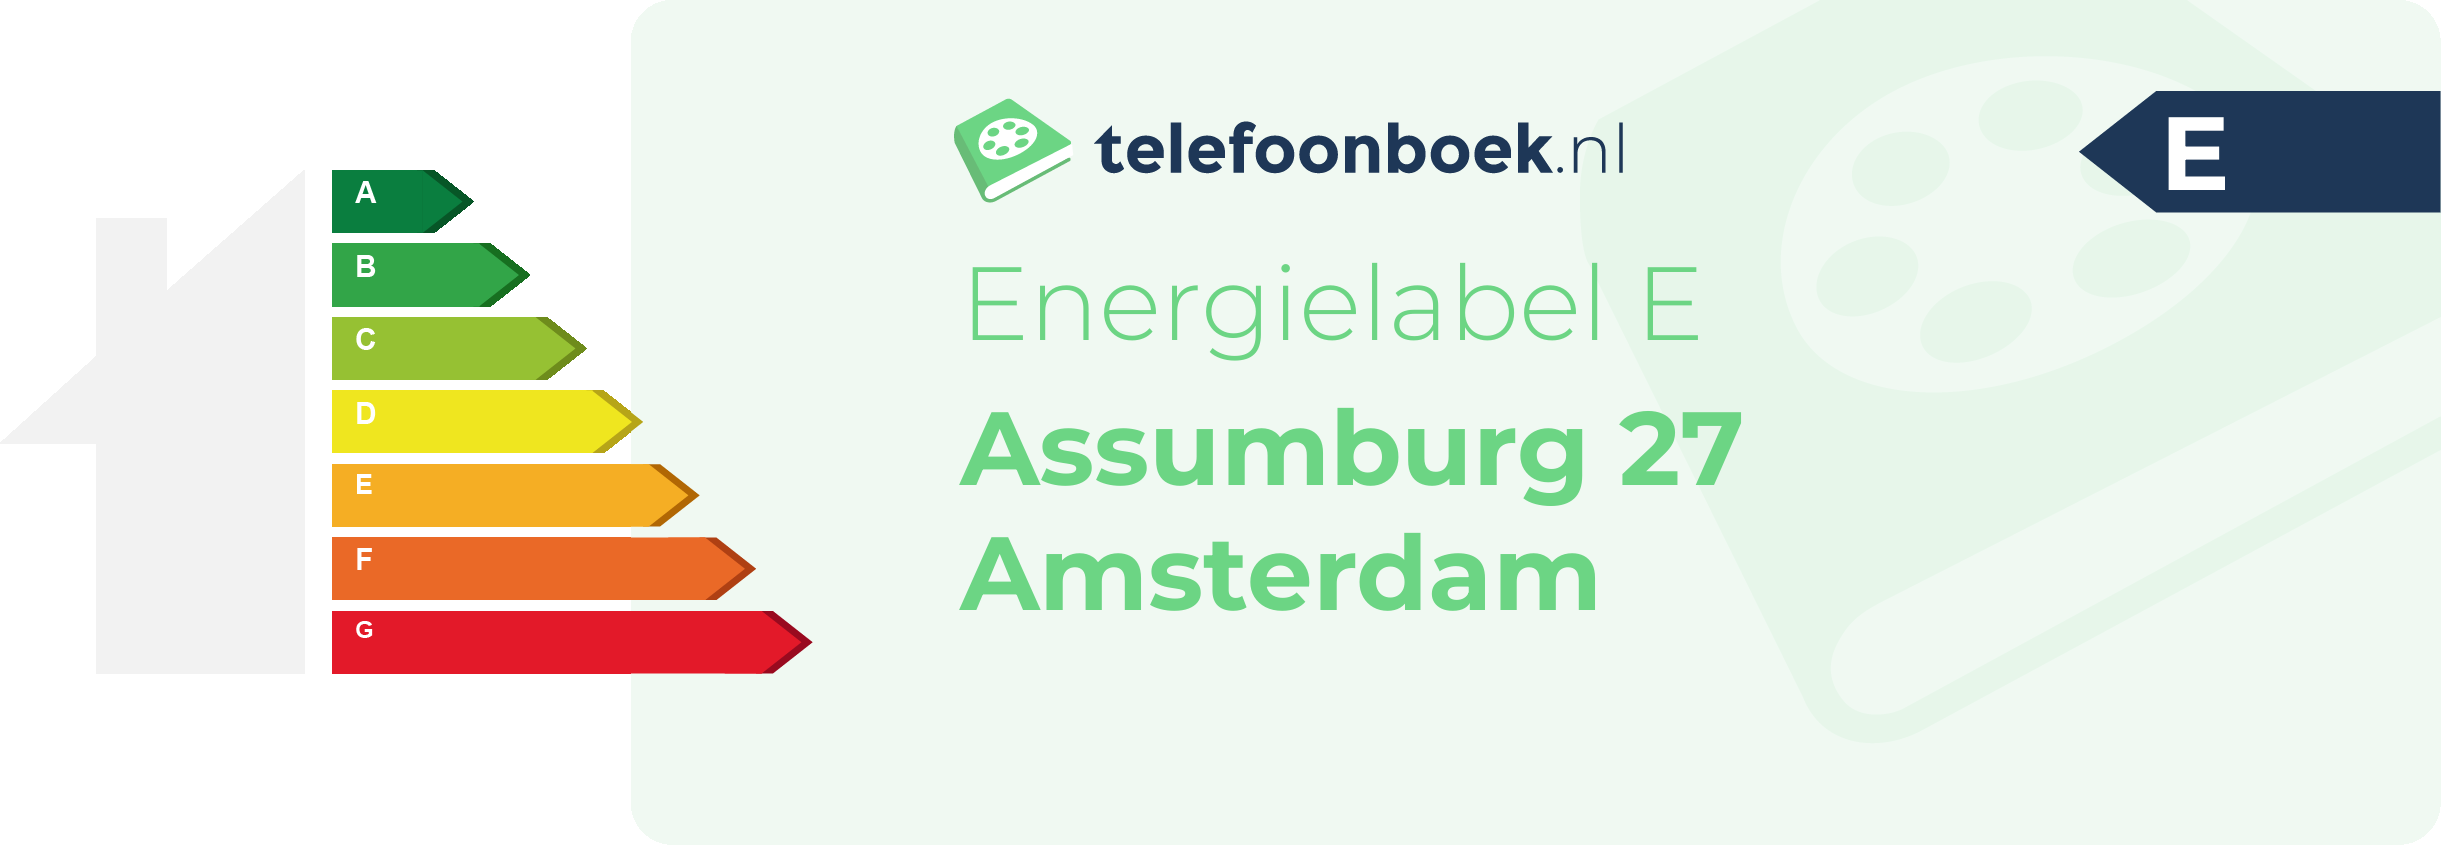 Energielabel Assumburg 27 Amsterdam